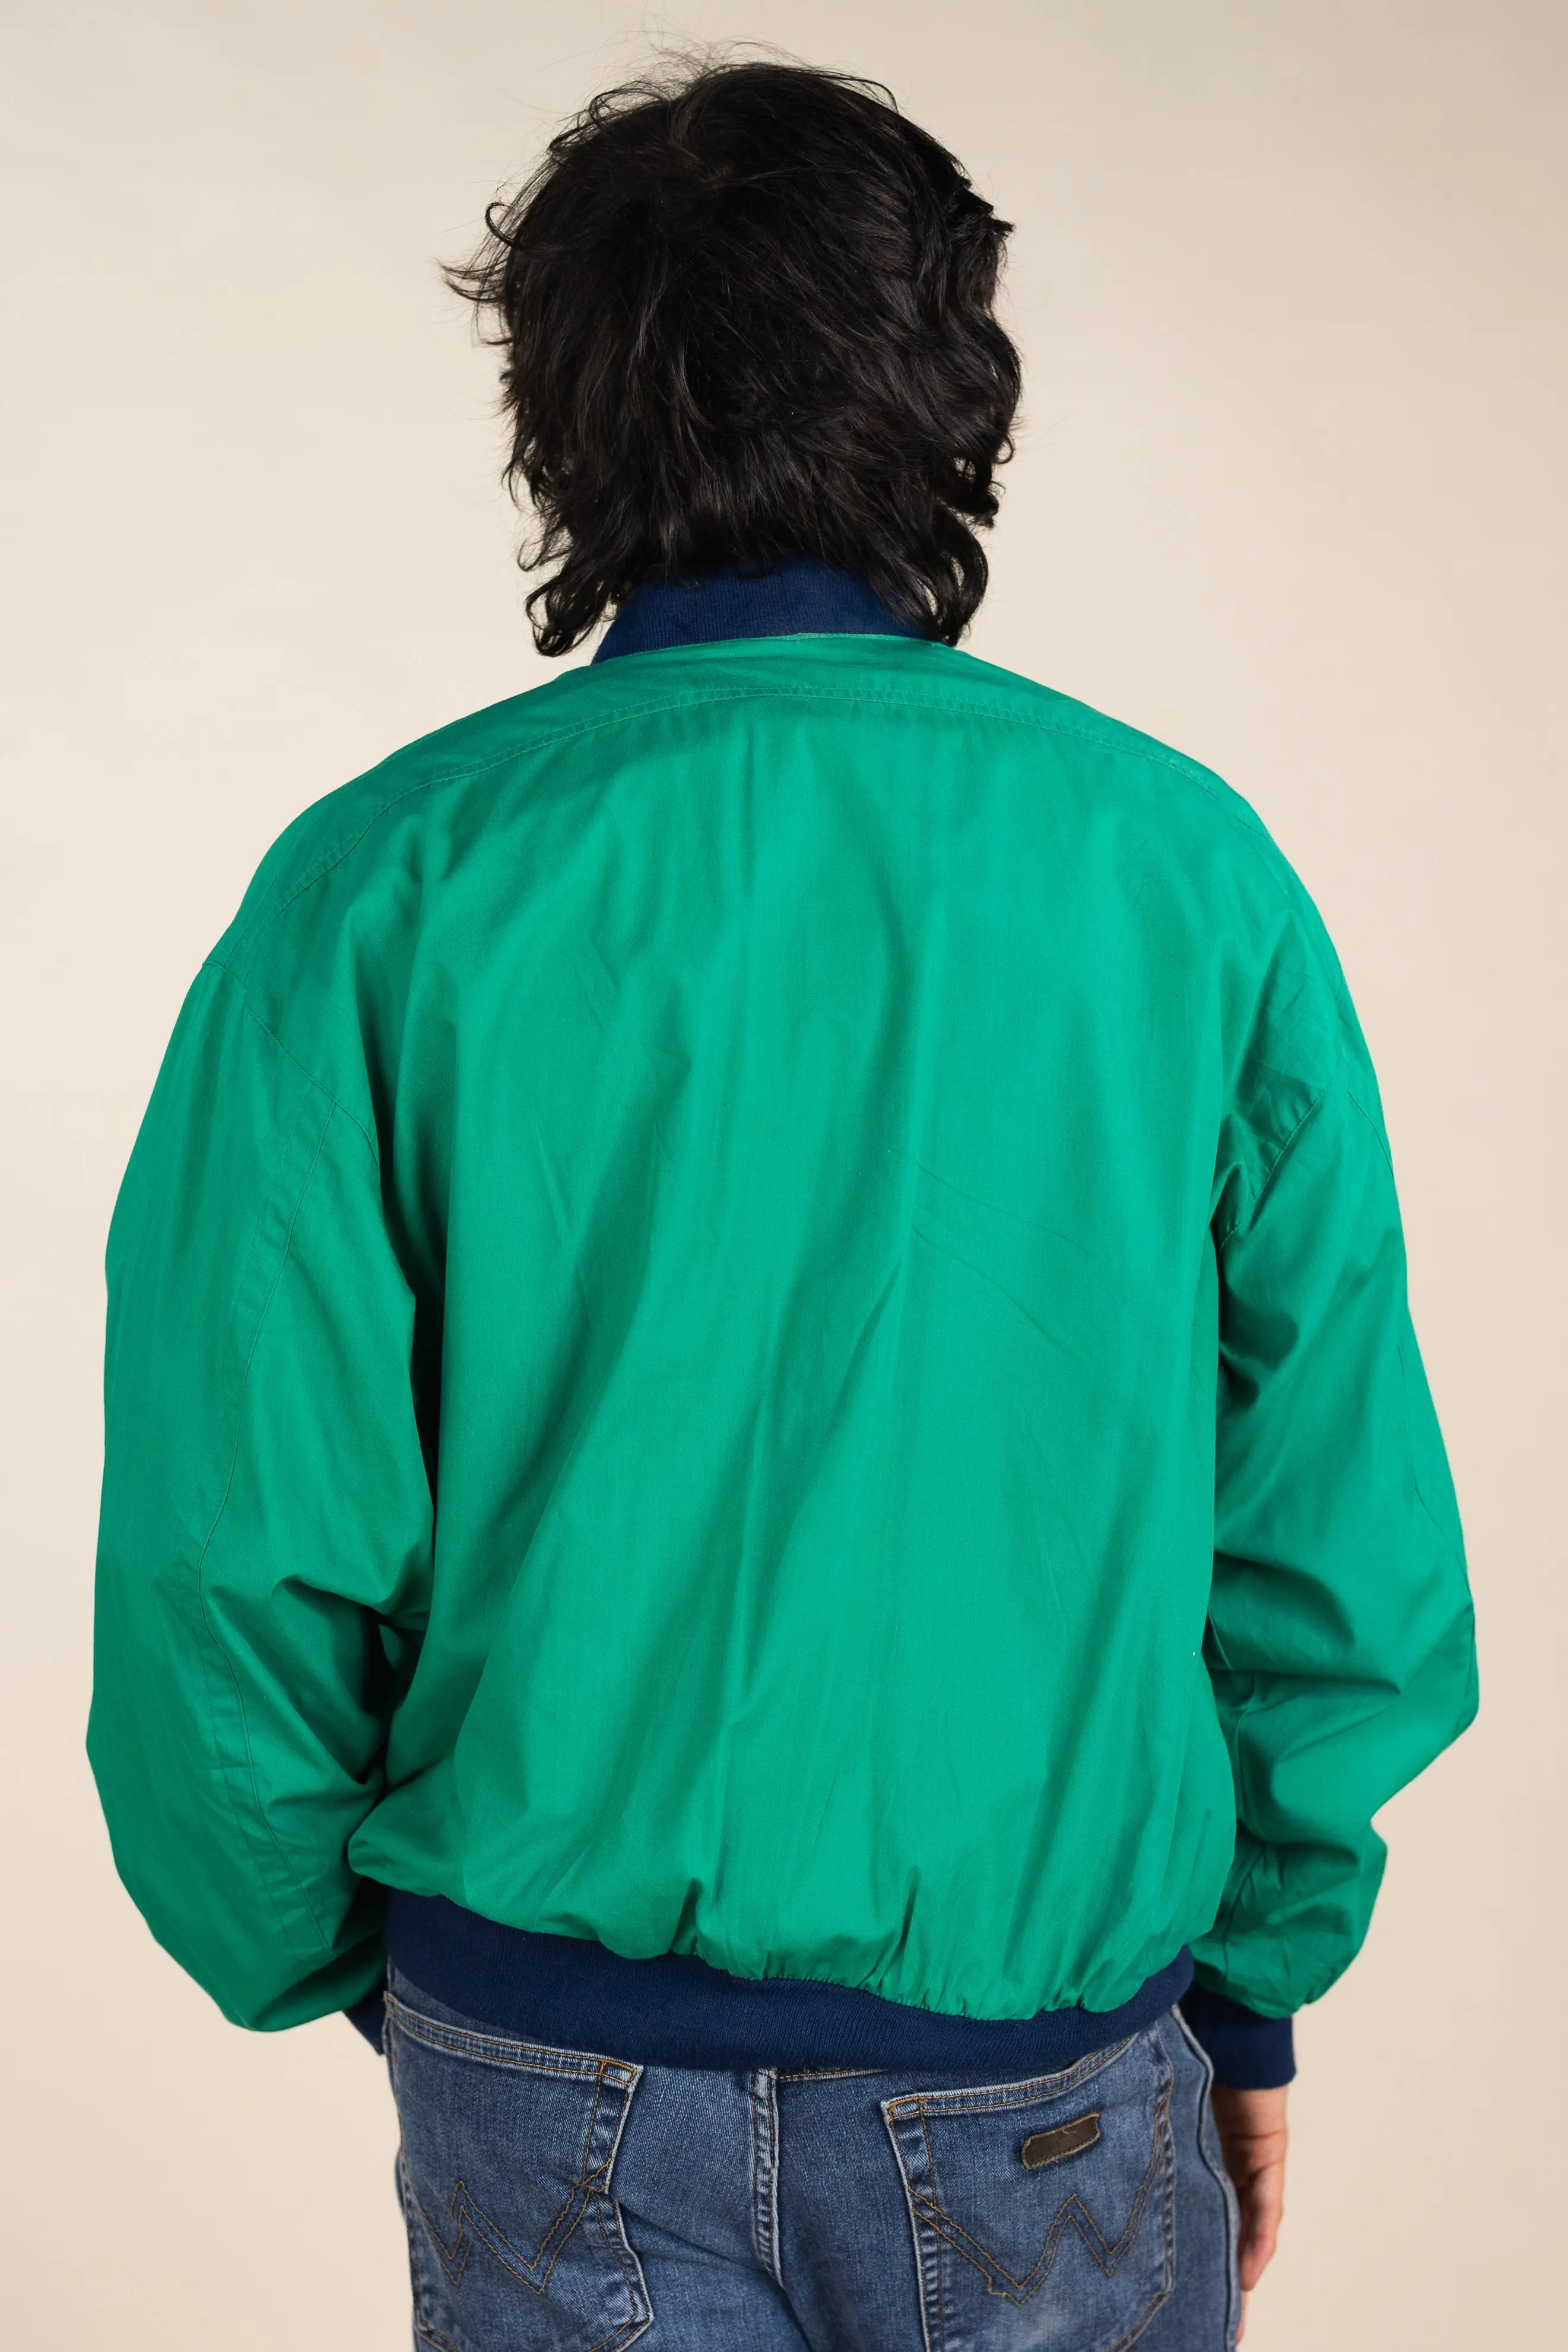 Alexander - Green Bomber Jacket- ThriftTale.com - Vintage and second handclothing